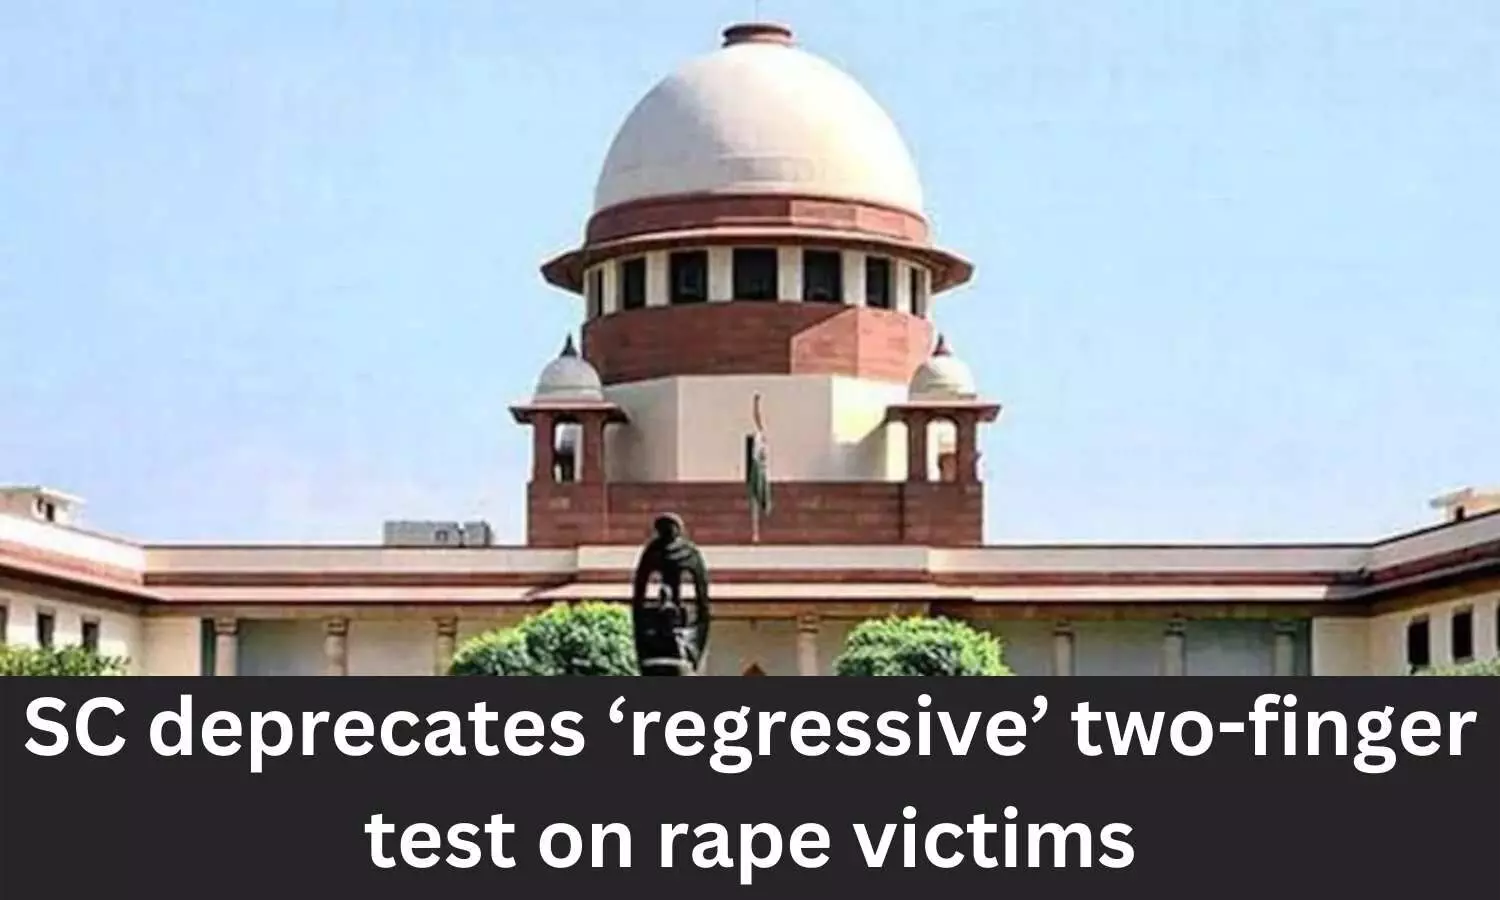 SC deprecates regressive two-finger test on rape victims